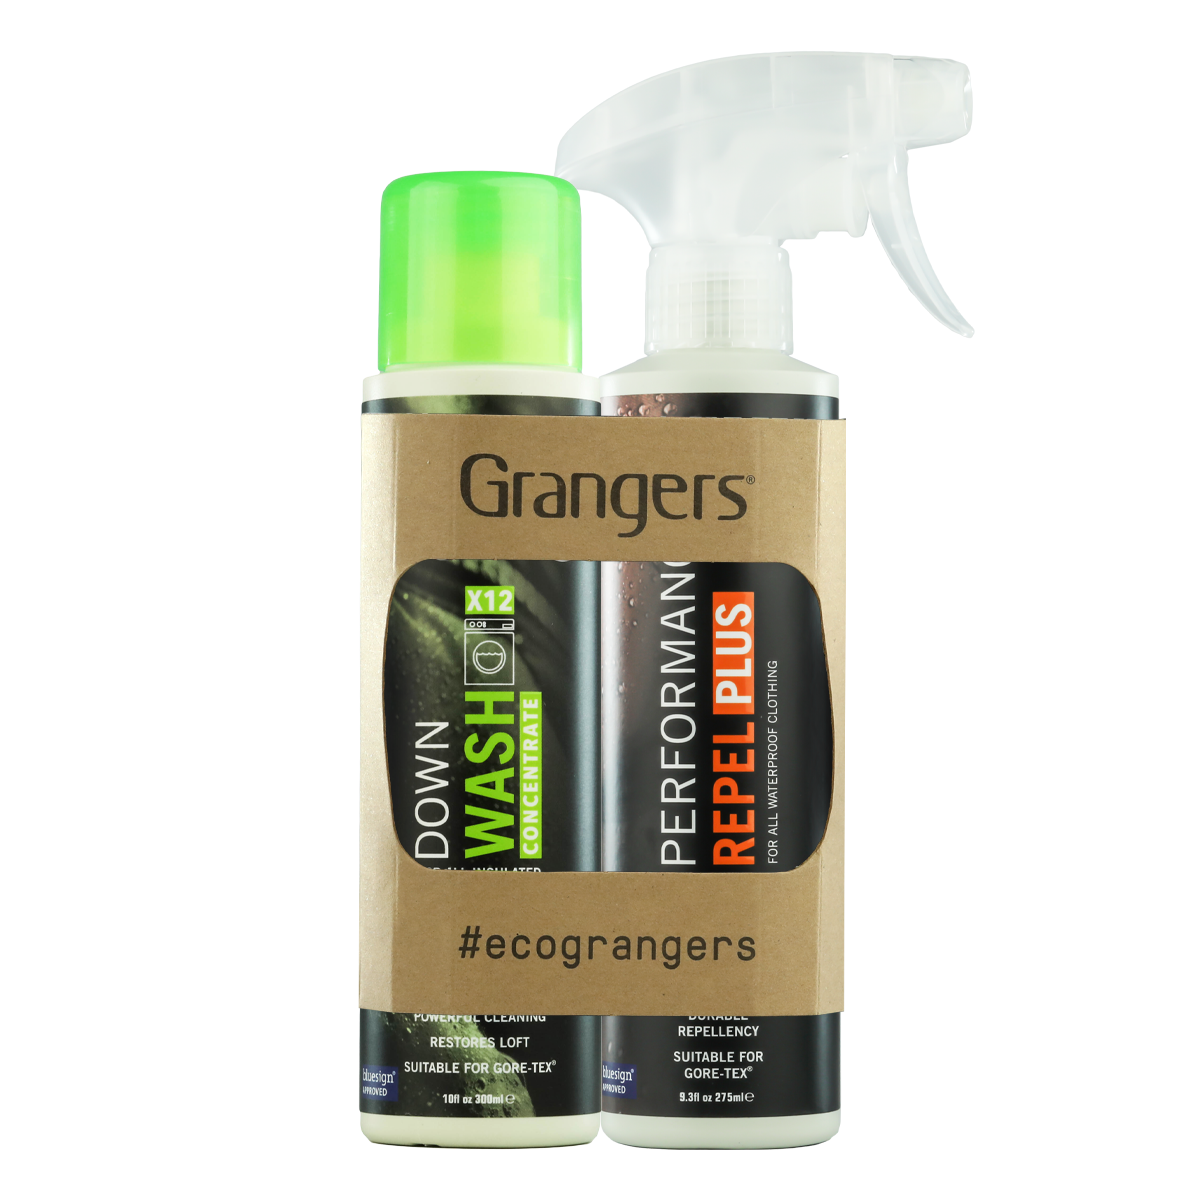 Grangers Performance Repel Plus / Waterproofing spray for